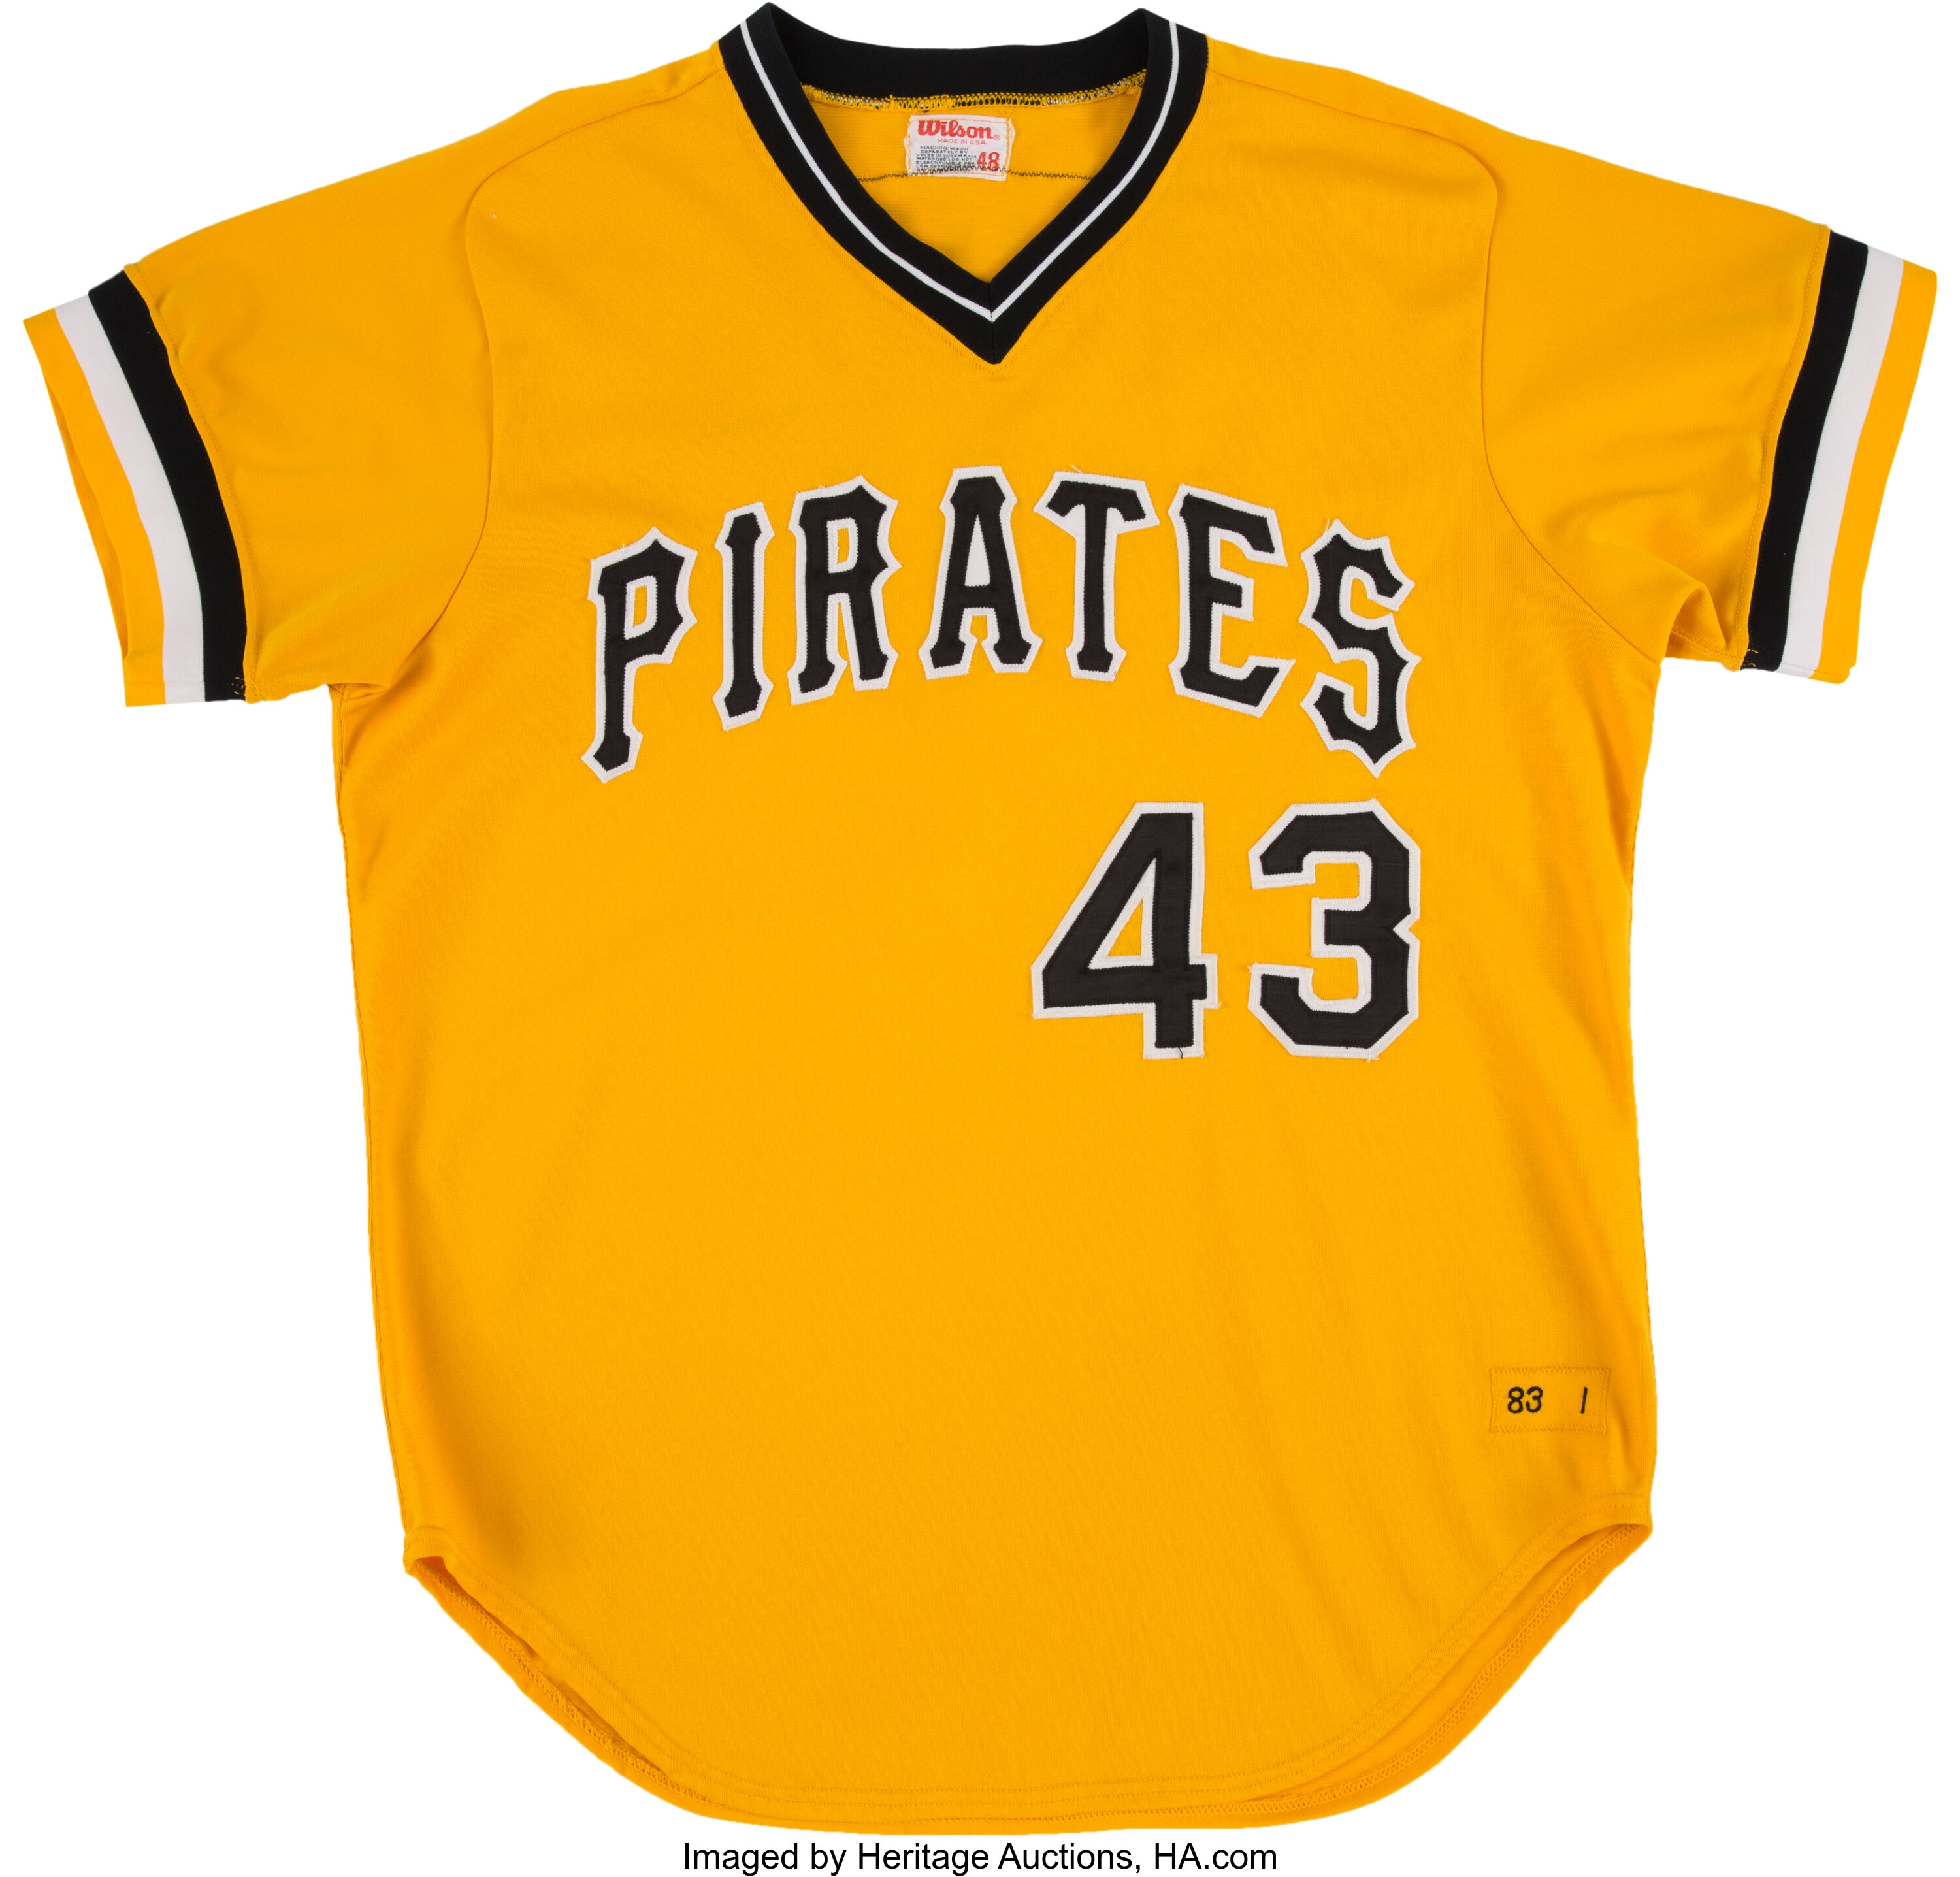 pittsburgh pirates game jersey